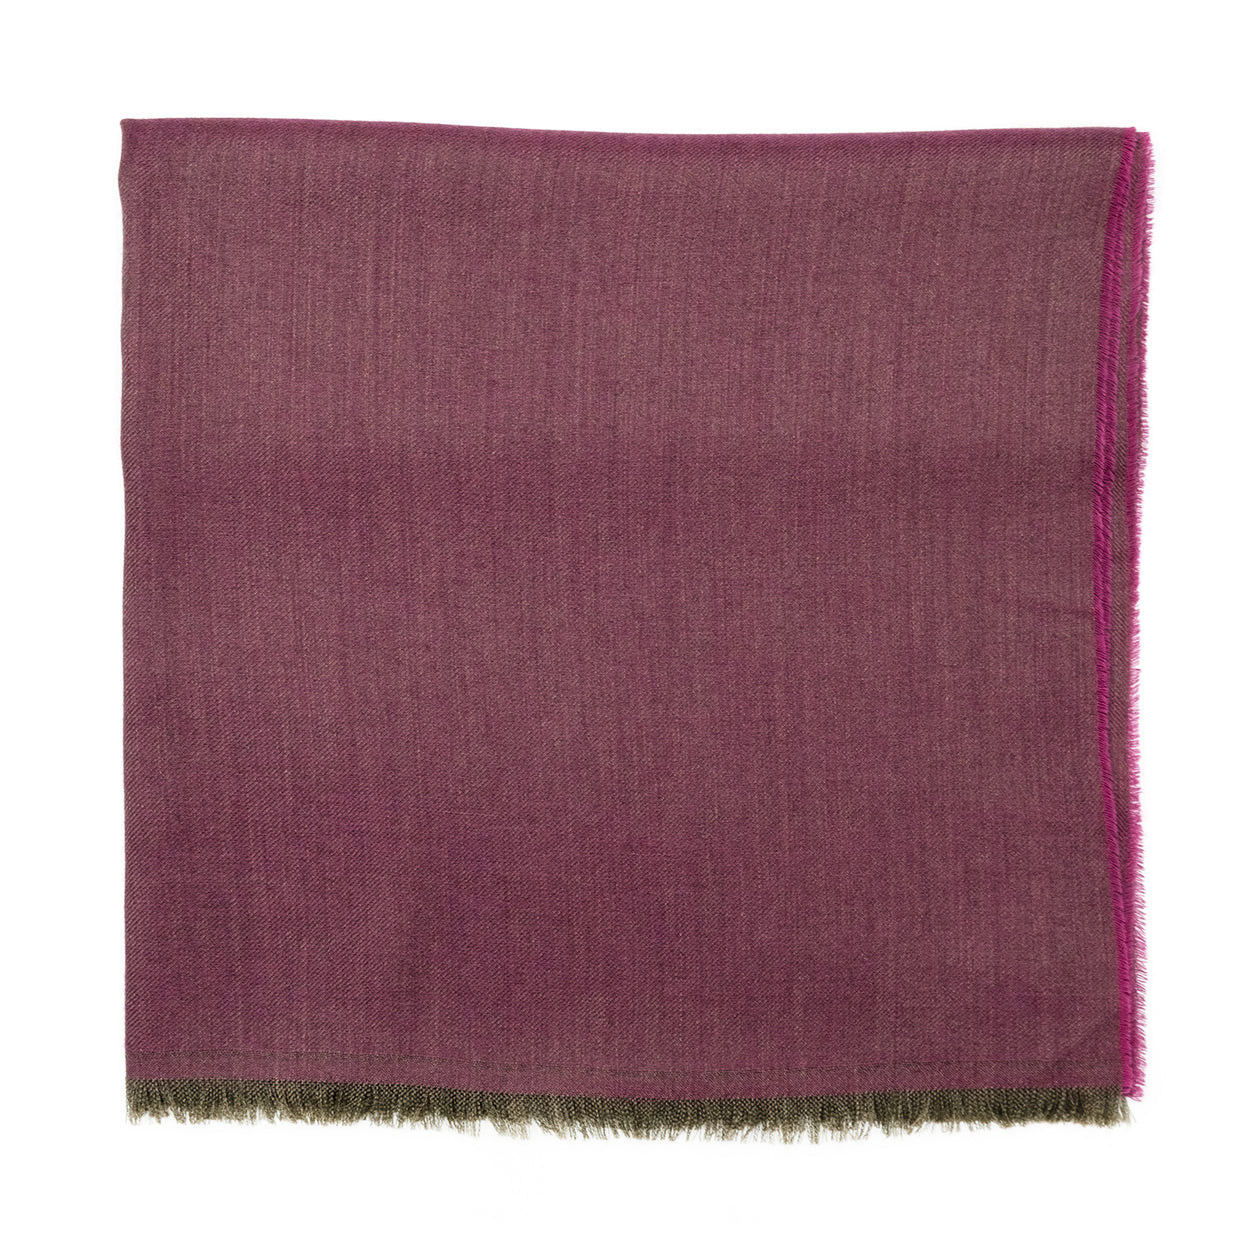 Cashmere & silk stole plain burgundy frayed